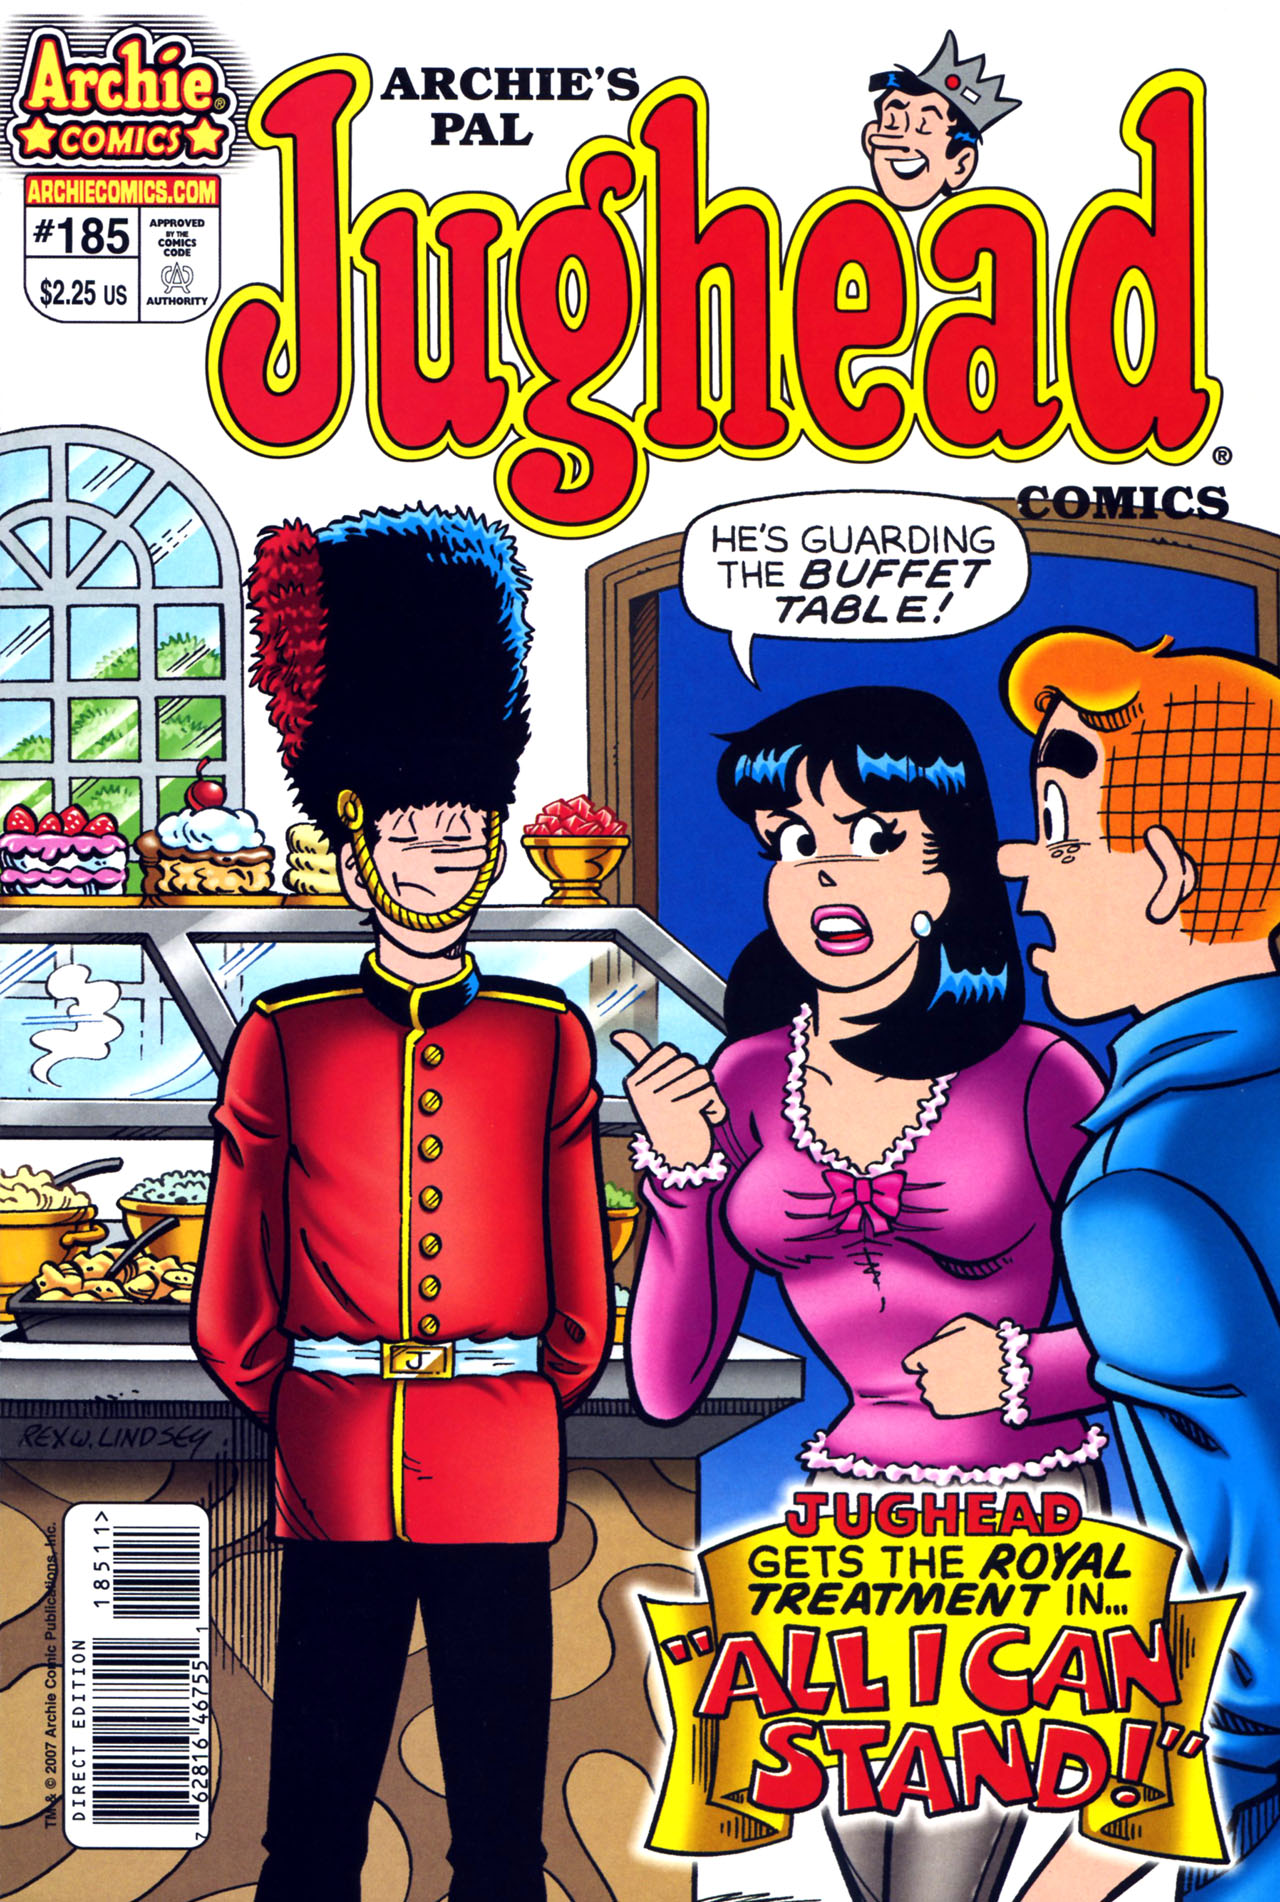 Read online Archie's Pal Jughead Comics comic -  Issue #185 - 1